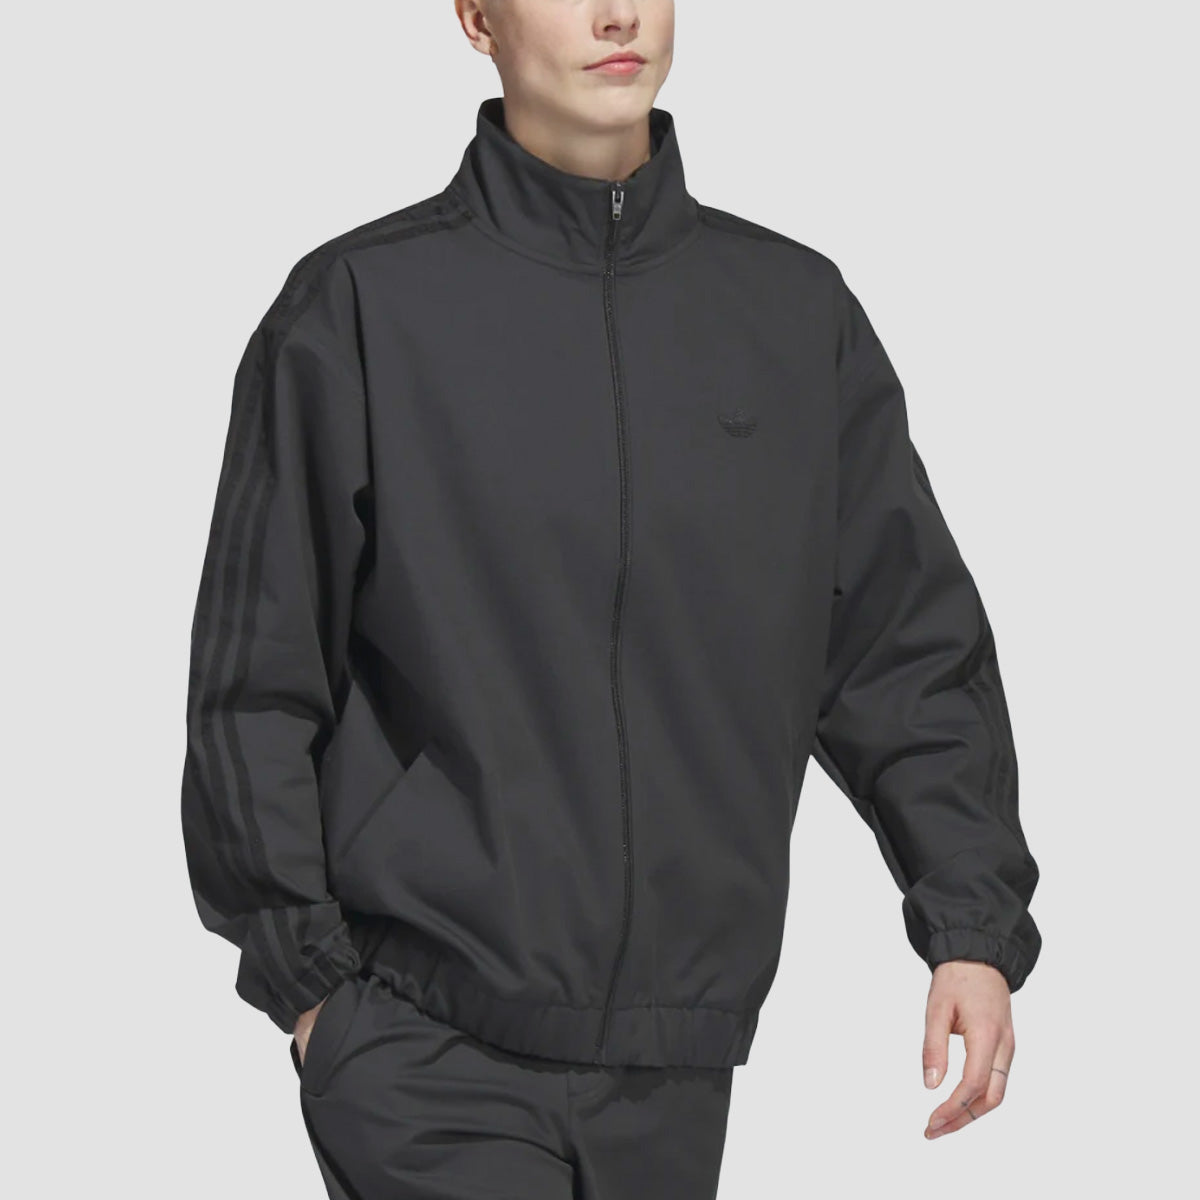 adidas Skateboarding Firebird Track Jacket (Gender Neutral) Carbon/Black